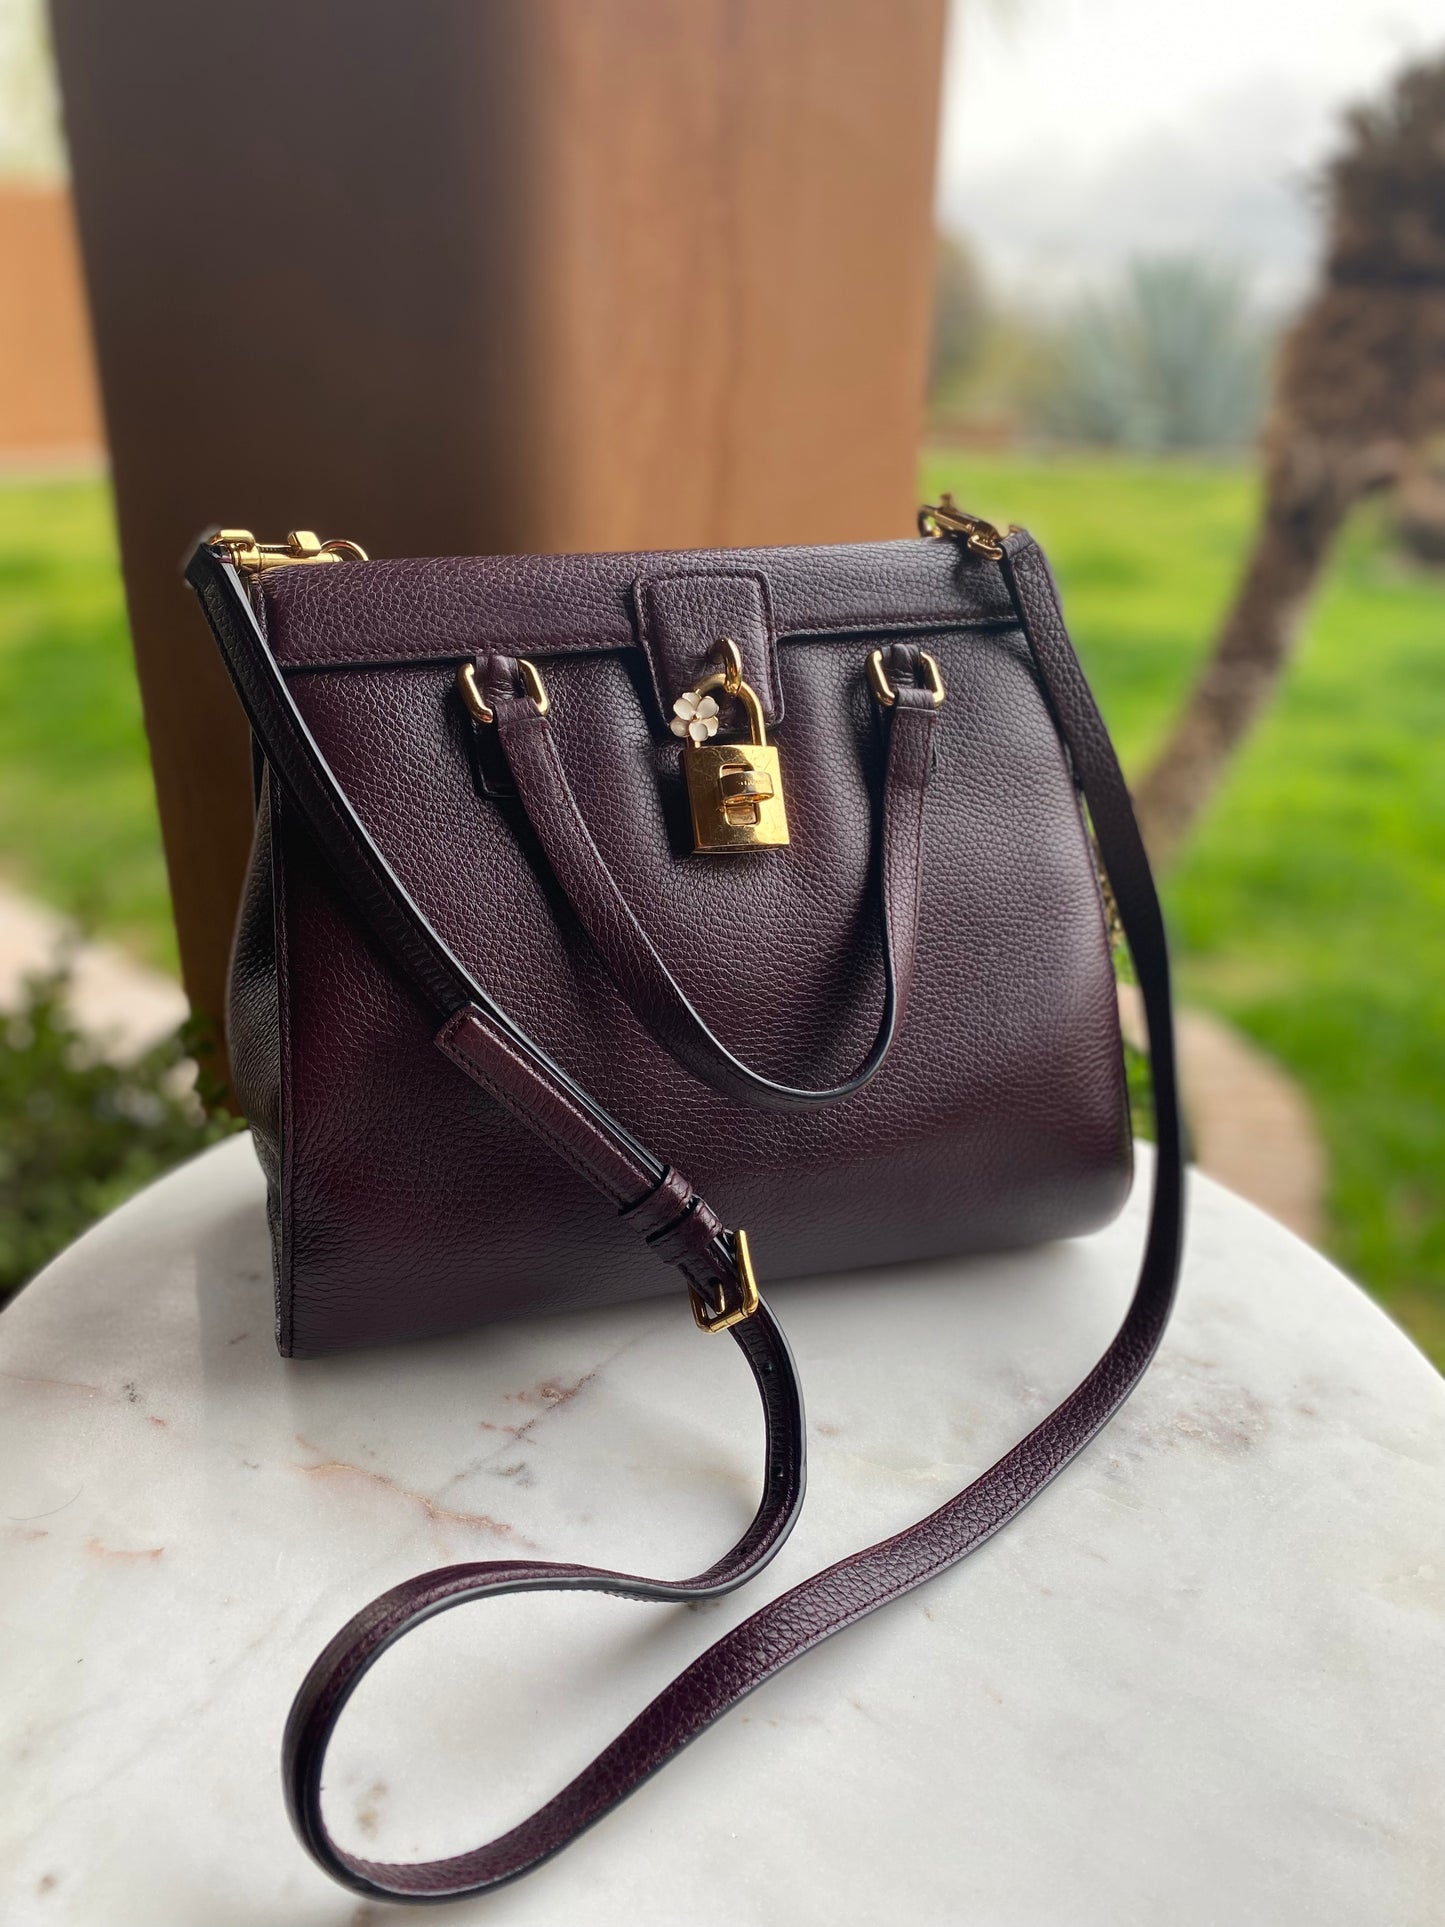 Dolce & Gabbana Flower Lock Lady Leather Bag